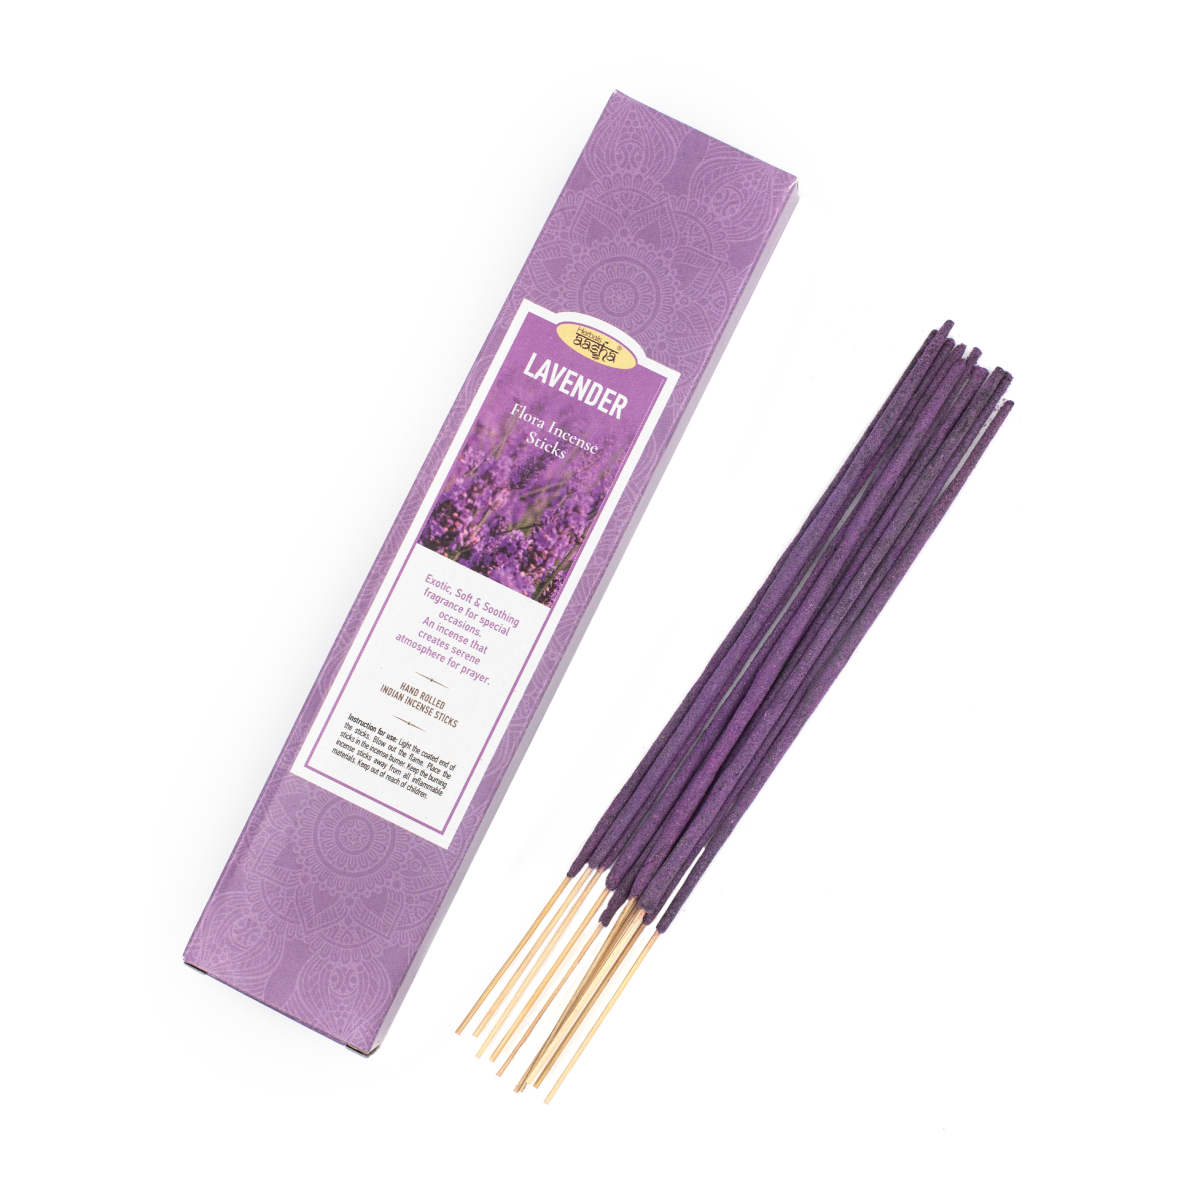 Ароматические палочки Aasha Herbals Лаванда (Lavender), 10 шт ароматические палочки aasha herbals агарвуд oud 10 шт